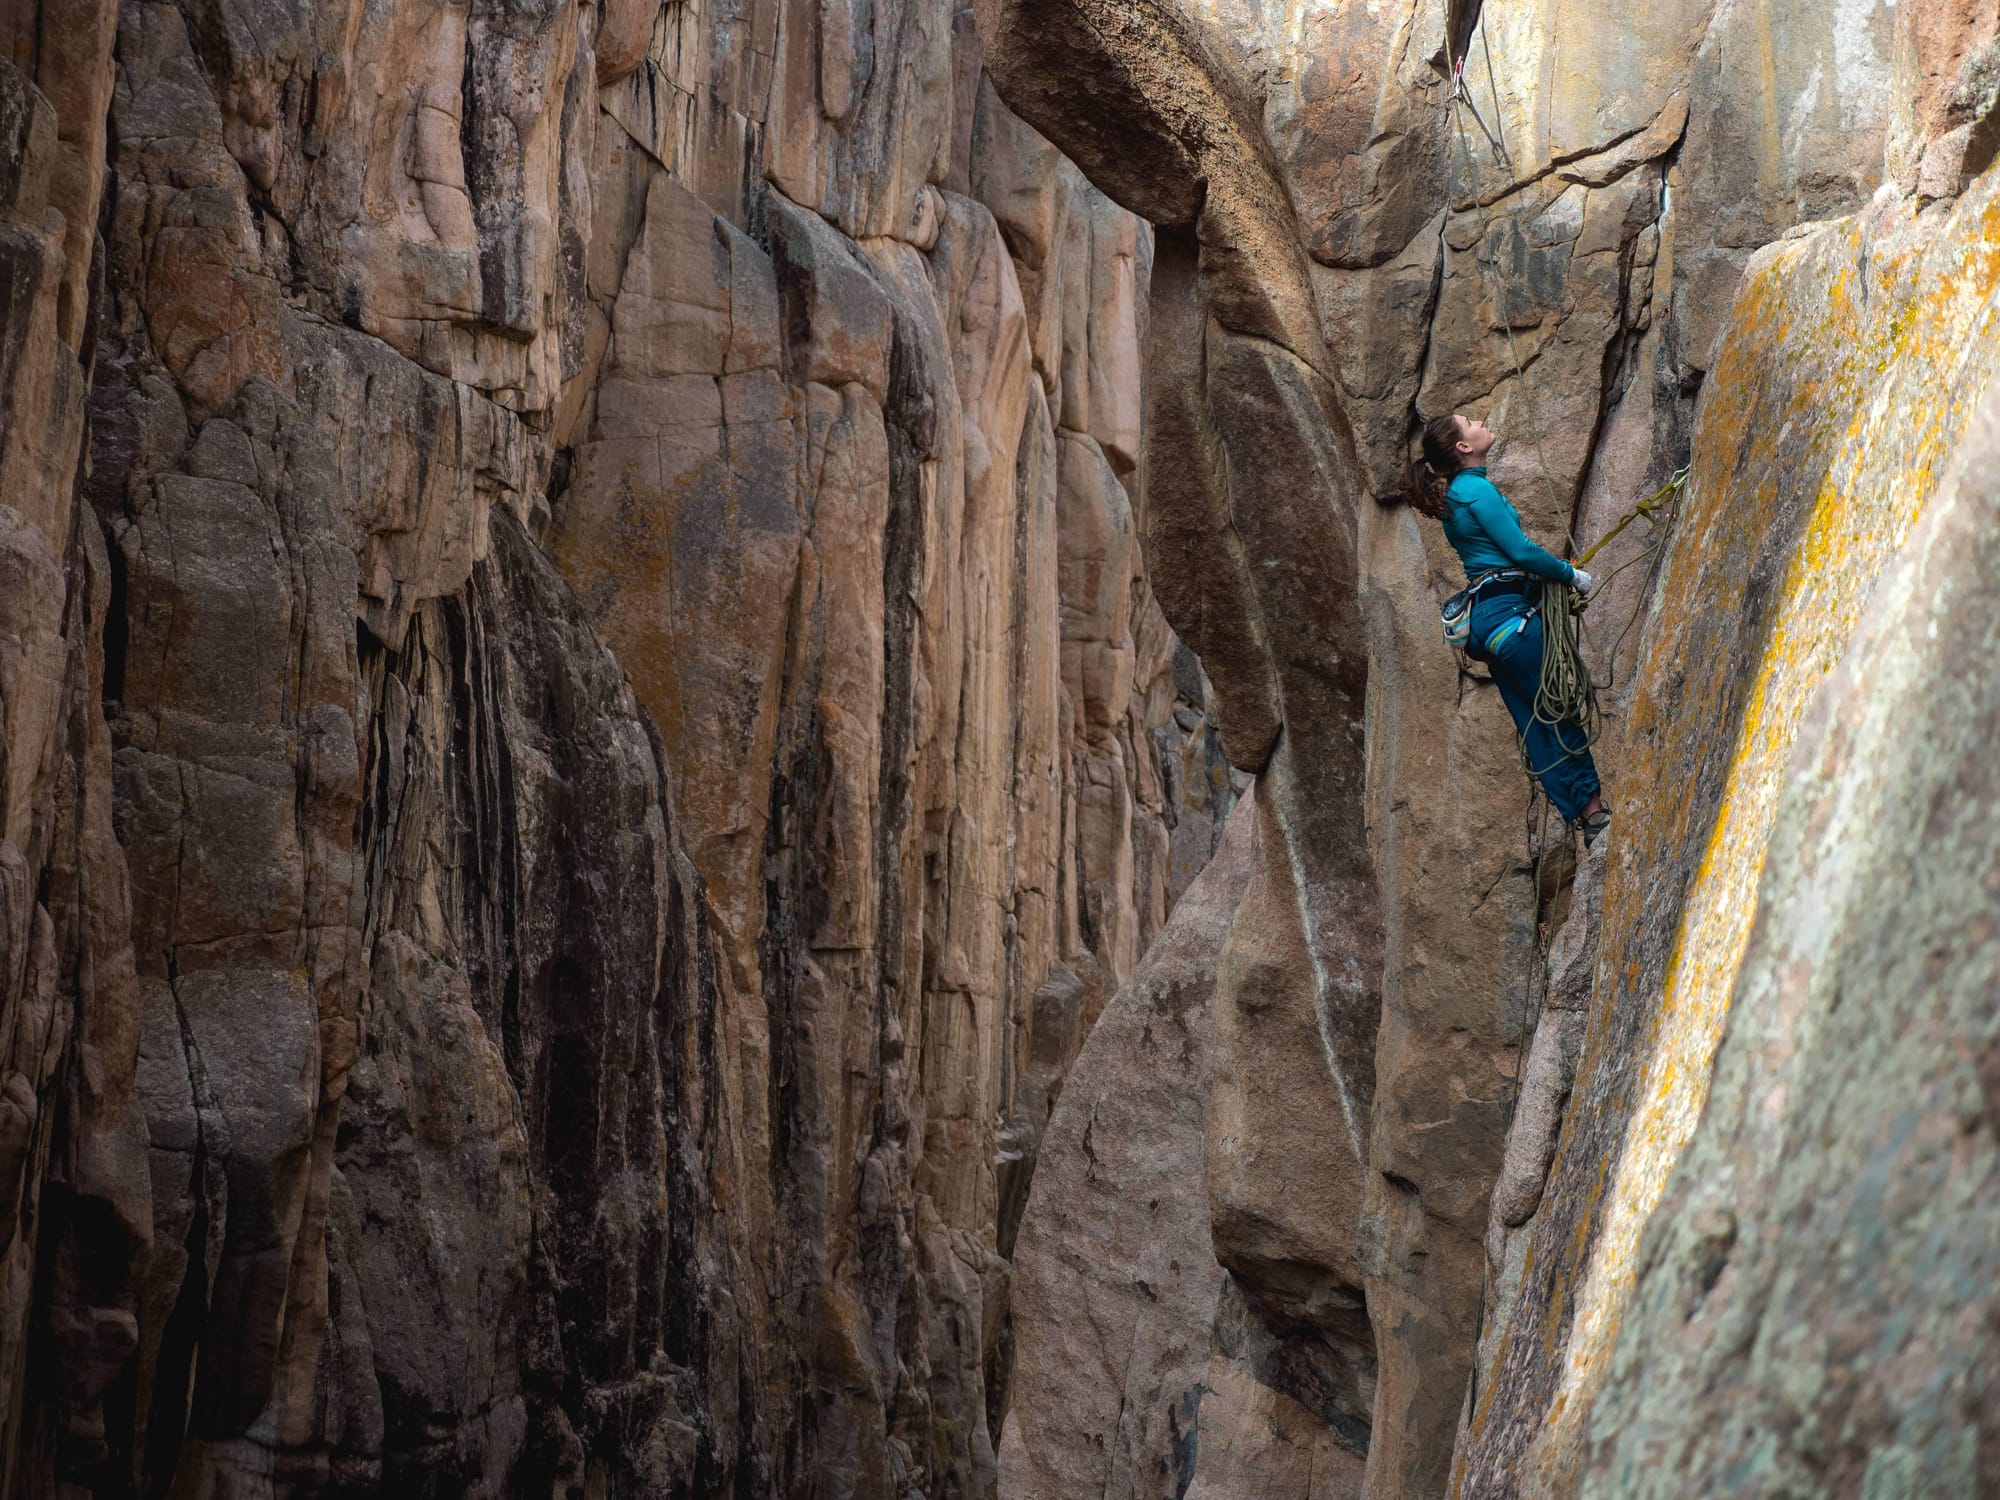 People in Climbing: Matt Enlow